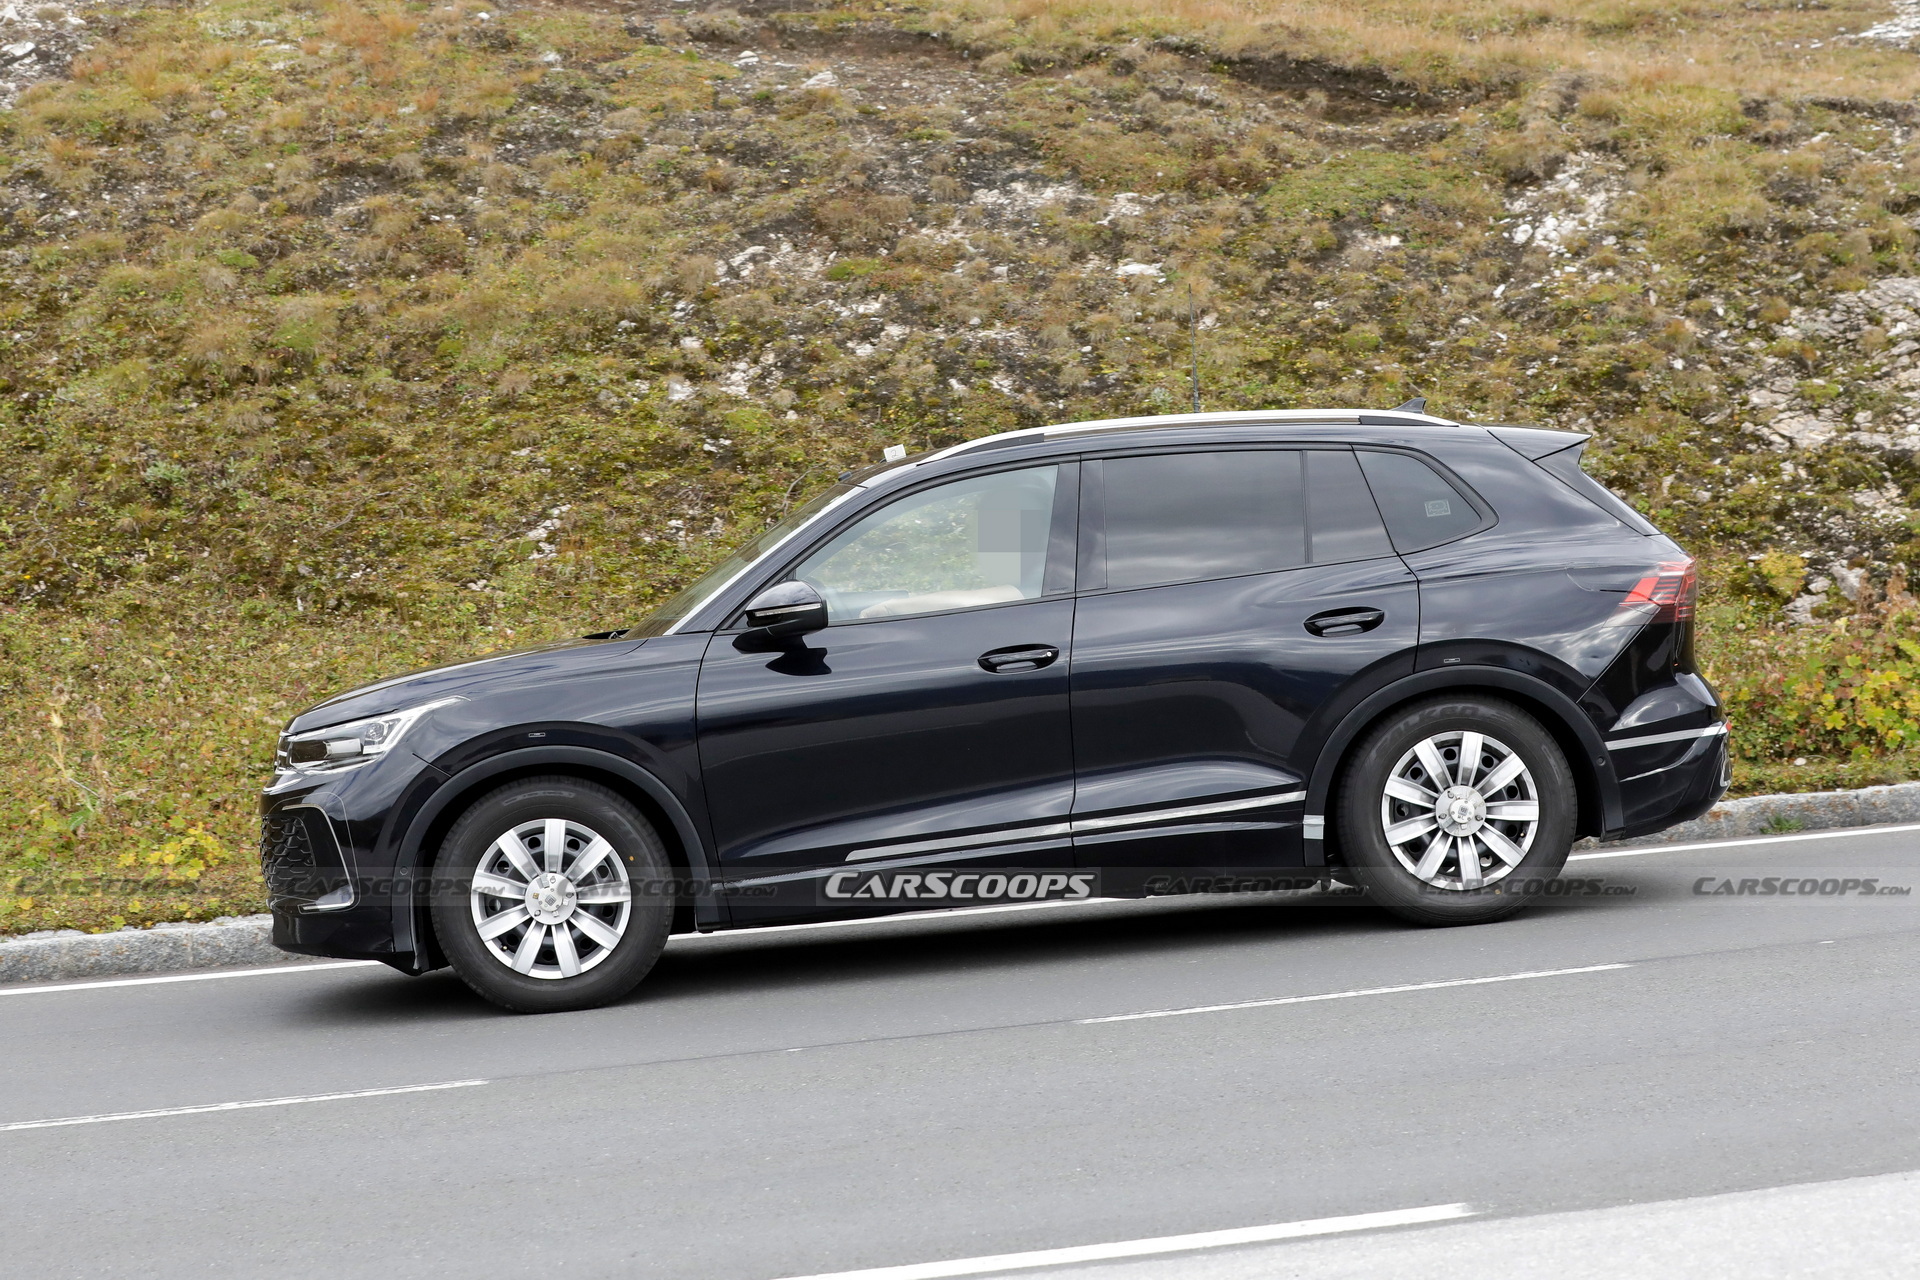 2024 VW Tiguan Rendered With Sleek Body After Recent Teaser Images